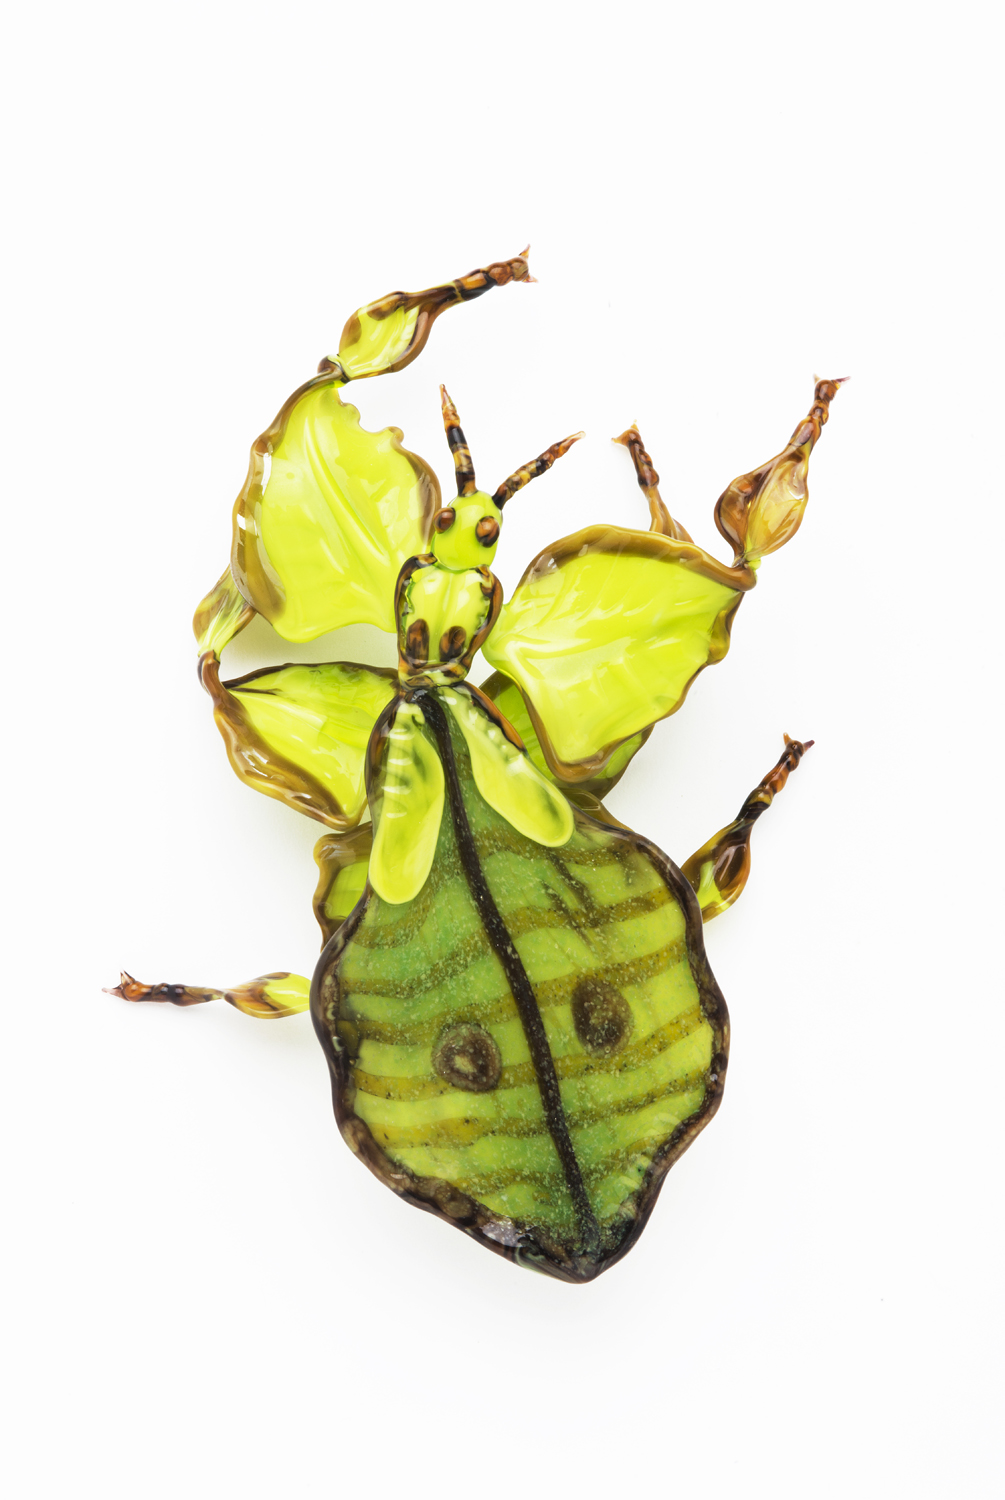  Vittorio Costantini,&nbsp; Phyllium giganteum, "Leaf Beetle"&nbsp; (2006, soda-lime glass, 3 3/4 x 2 7/8 x 7/8 inches), VC.71 